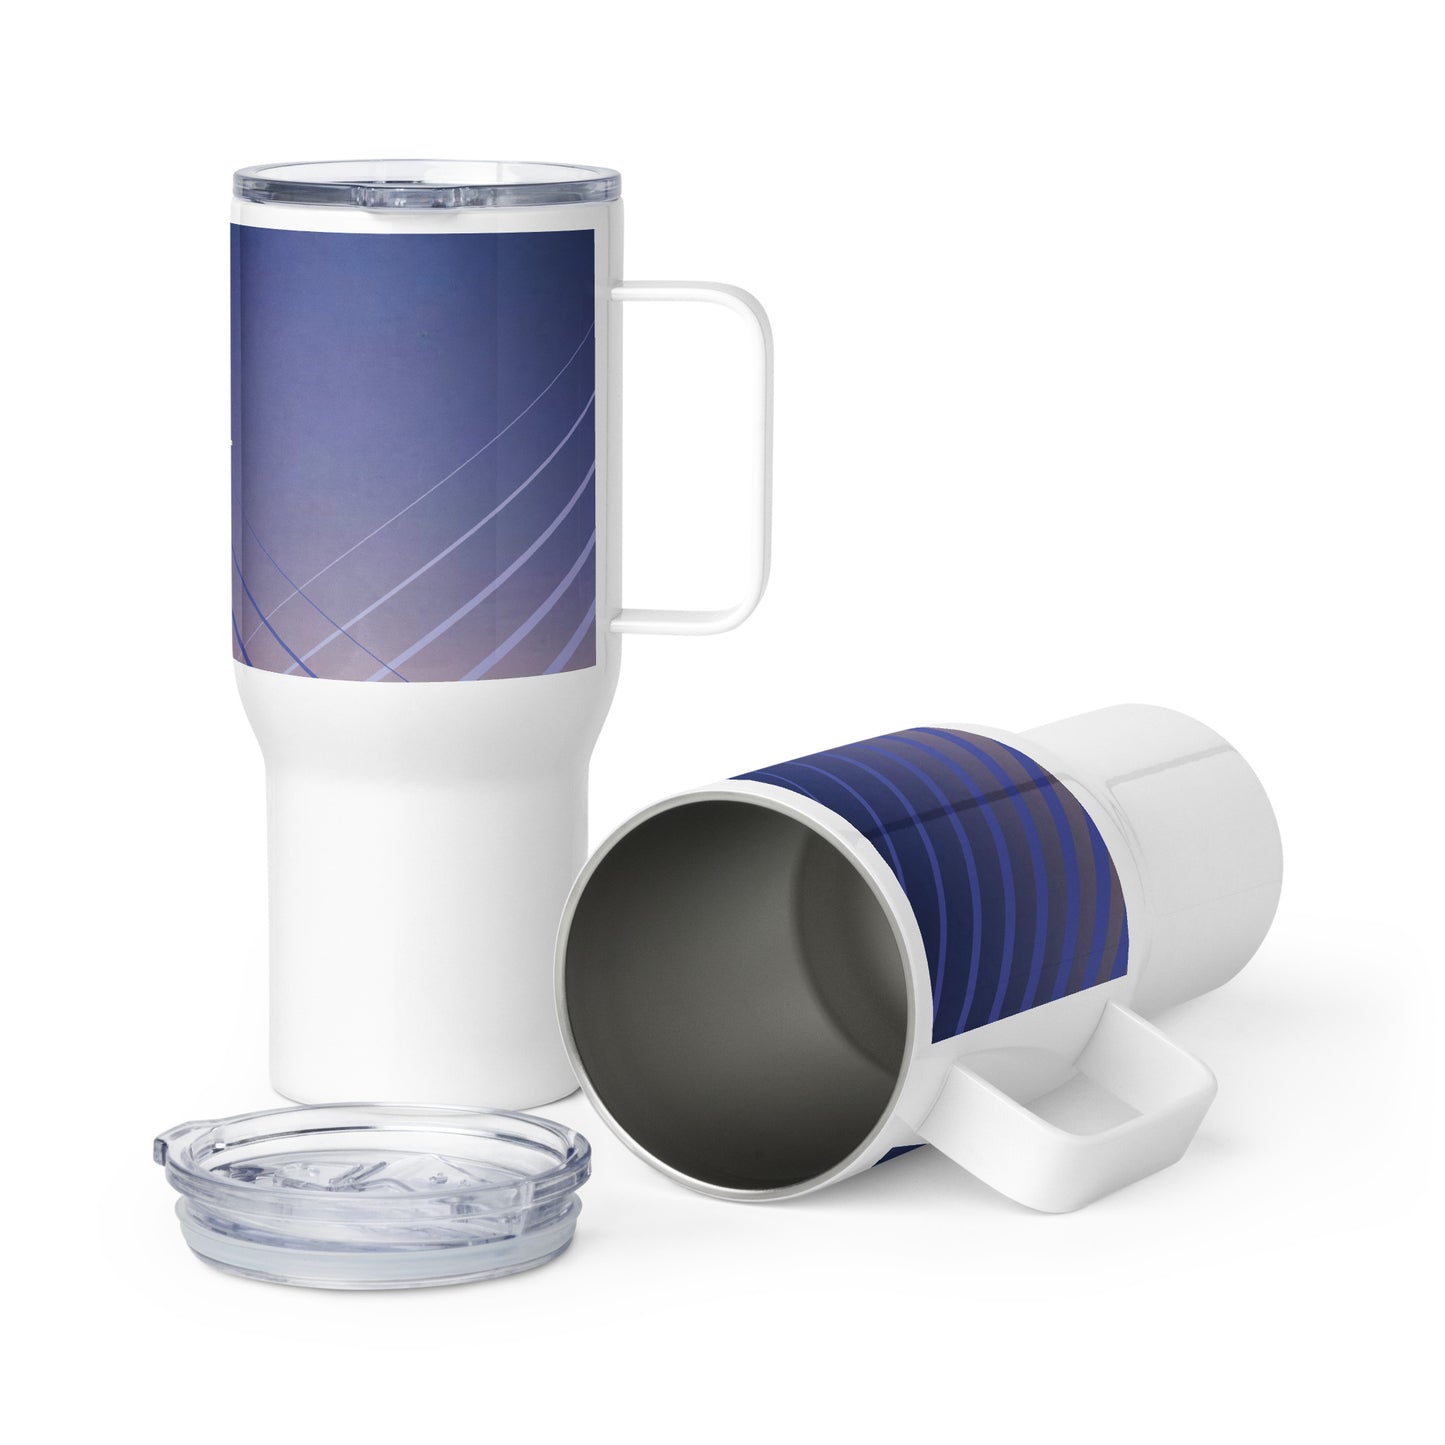 DWTC Sunrise travel mug with a handle